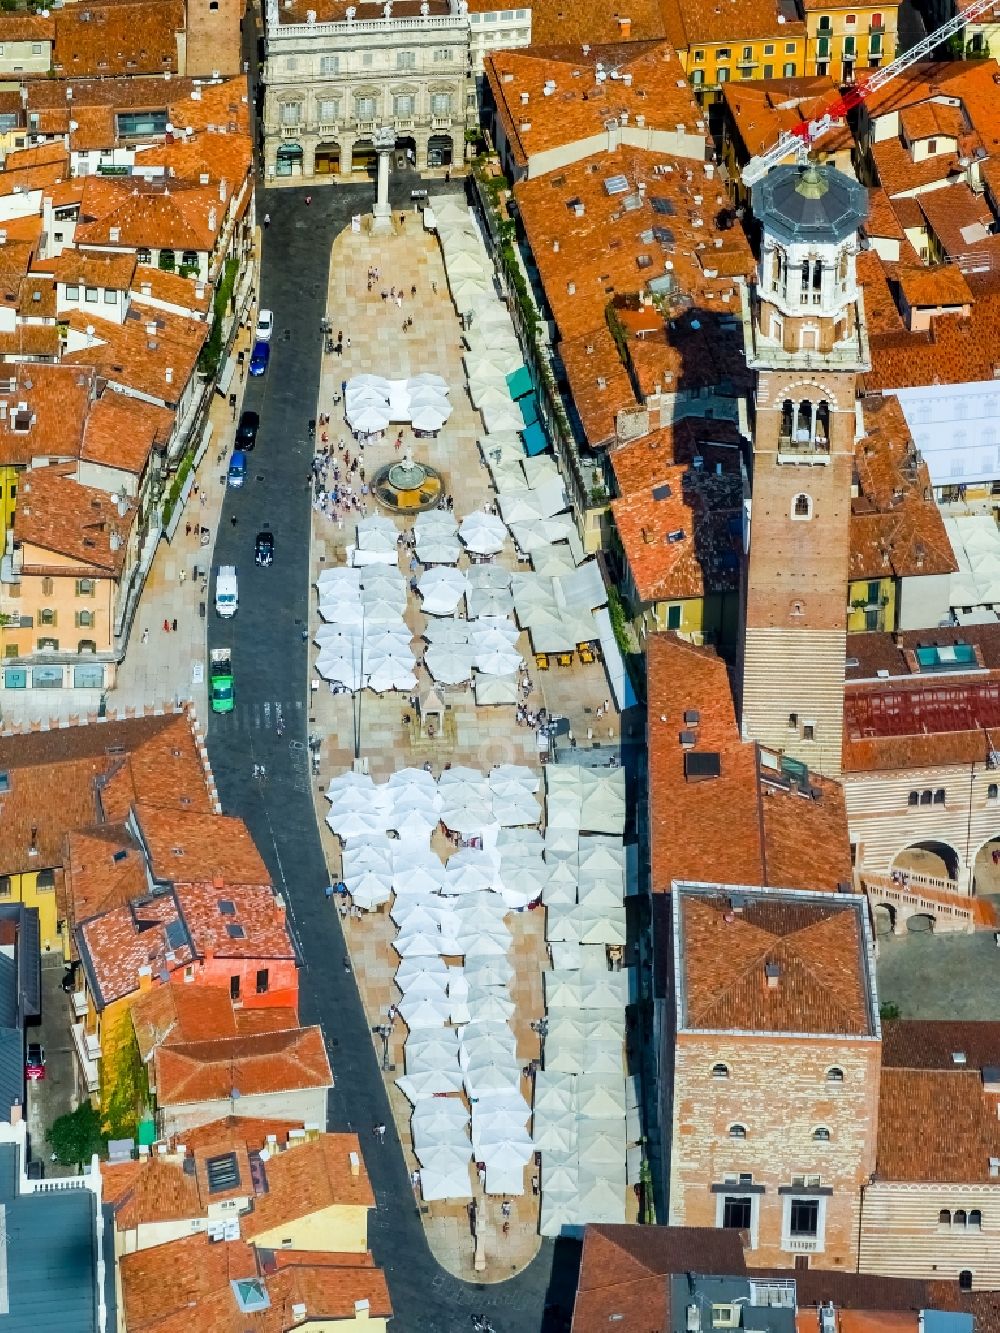 Verona from above - Ensemble space Piazza delle Erbe in the inner city center in Verona in Veneto, Italy